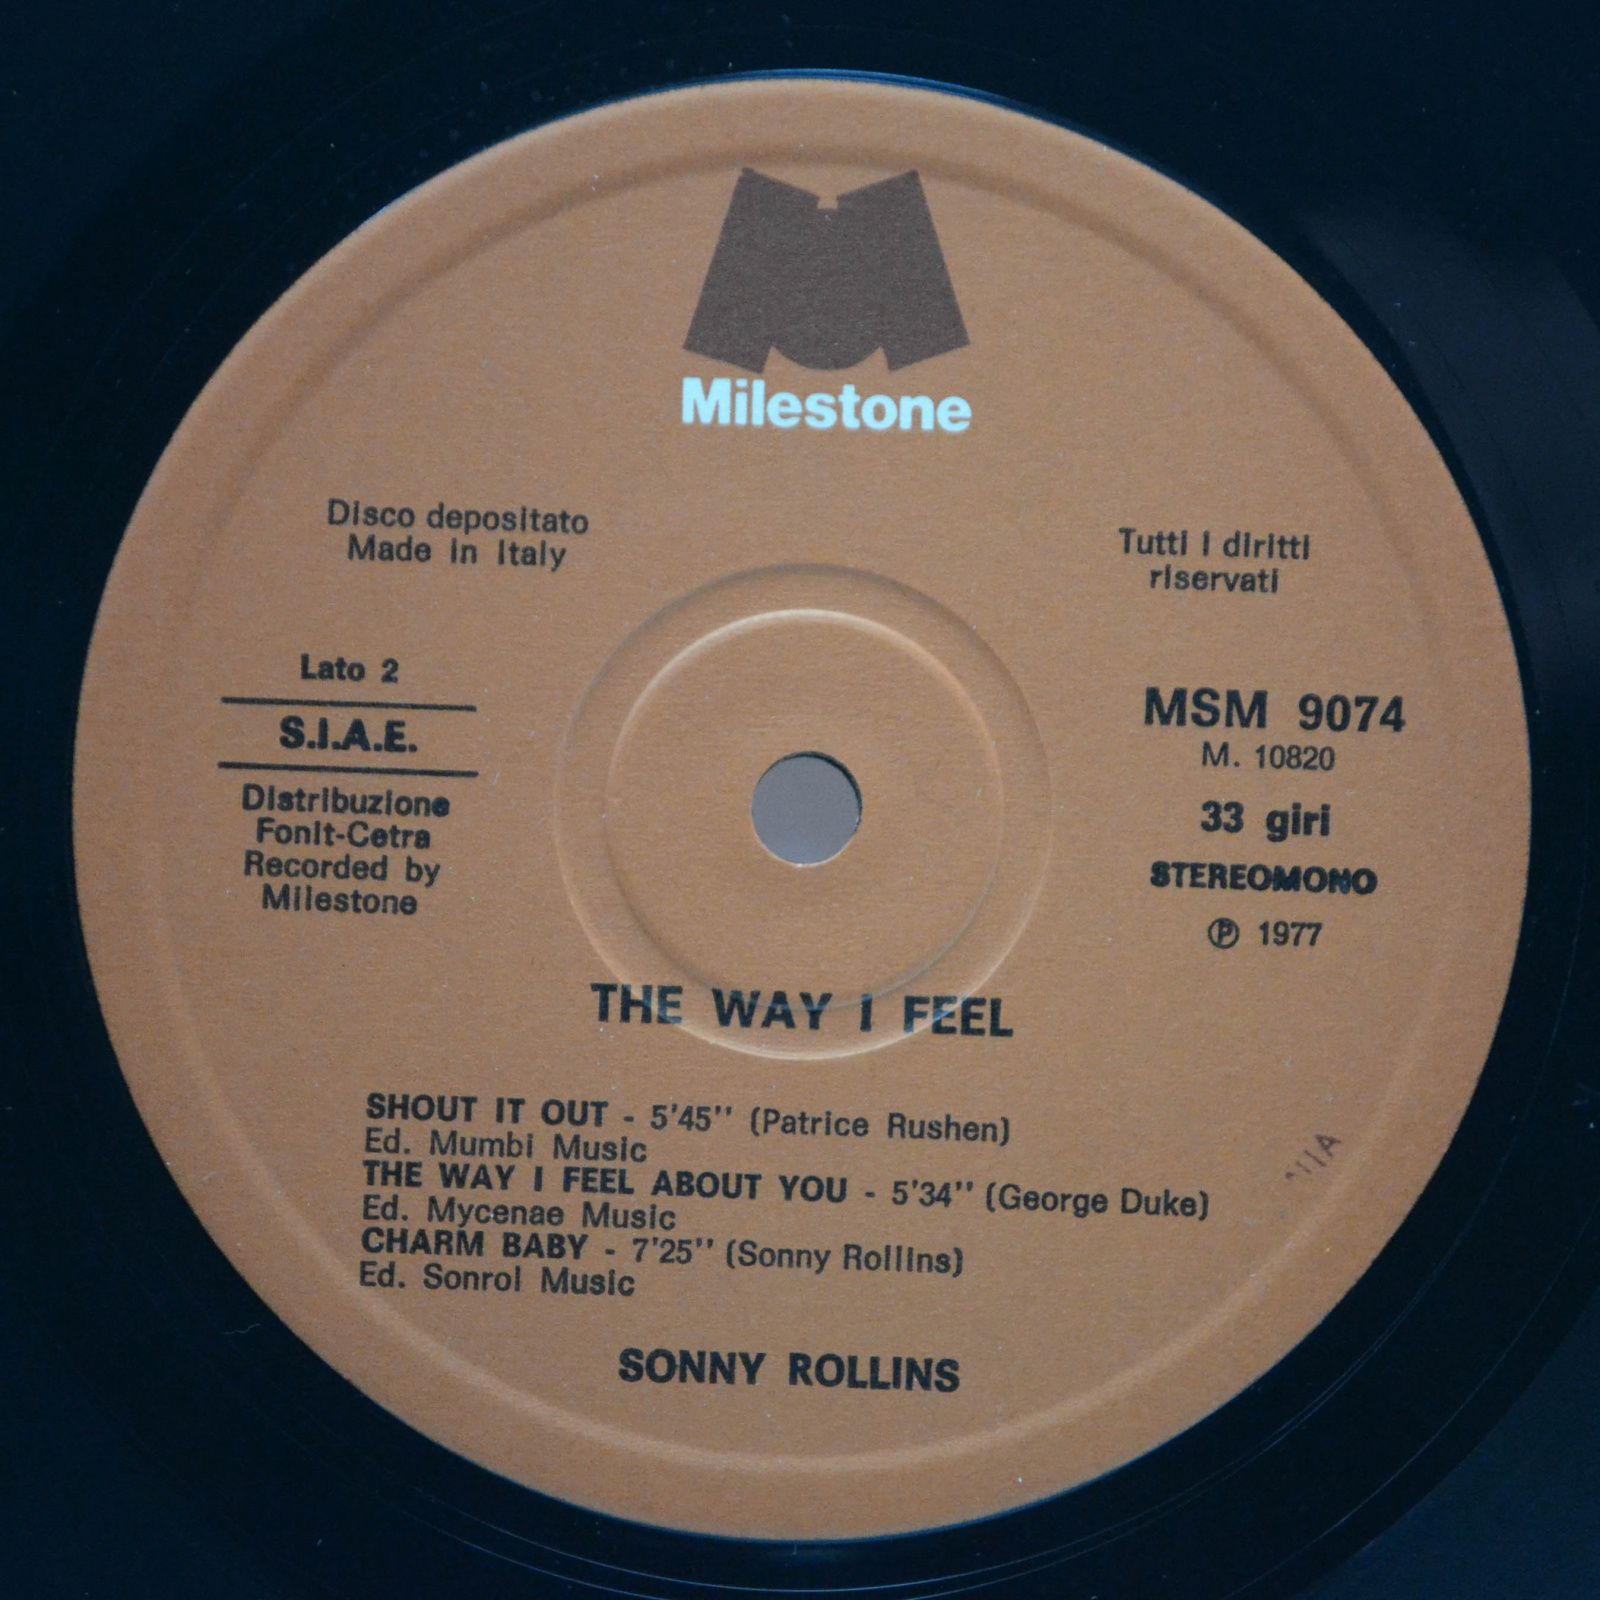 Sonny Rollins — The Way I Feel, 1976